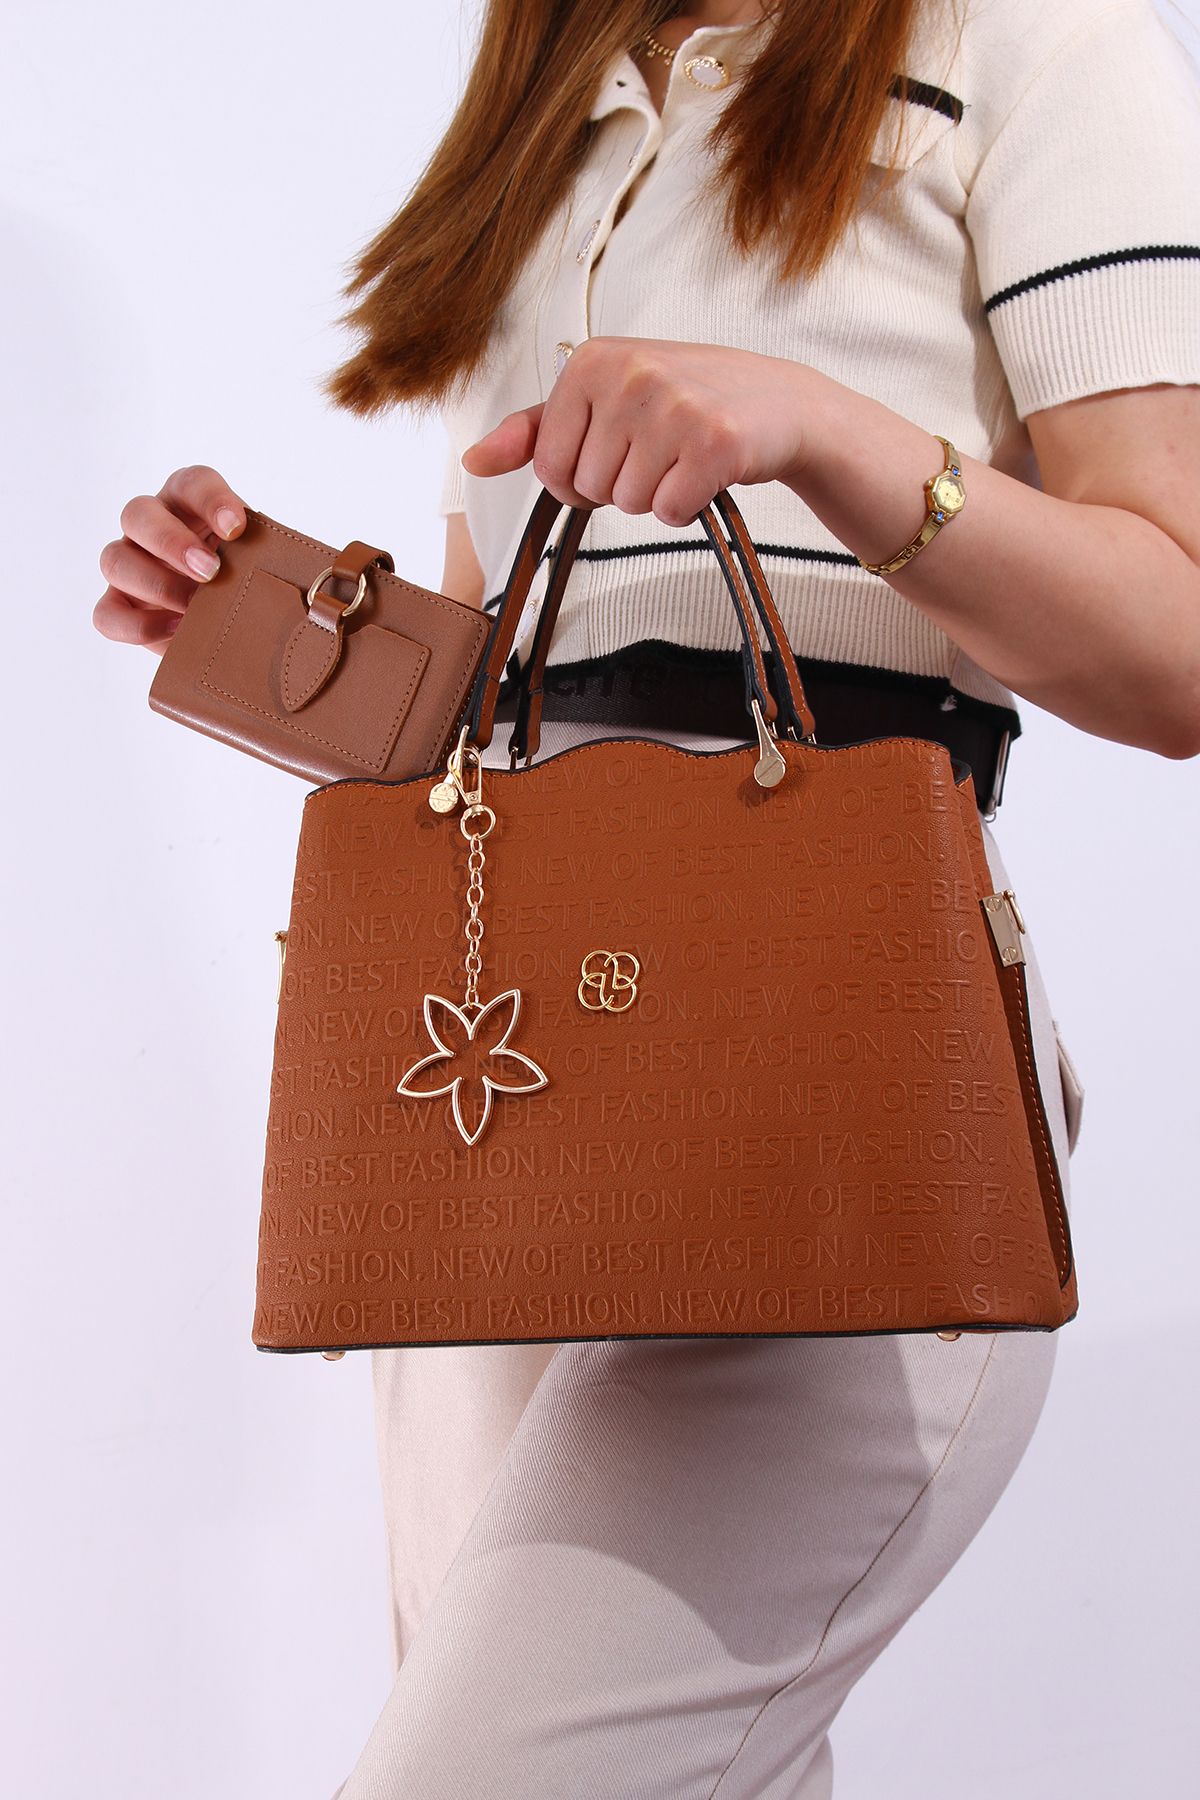 By Hakan dm-1263 cüzdan kombinli Kadın El Çantası Kadın Kol Çantası omuz çantası TABA